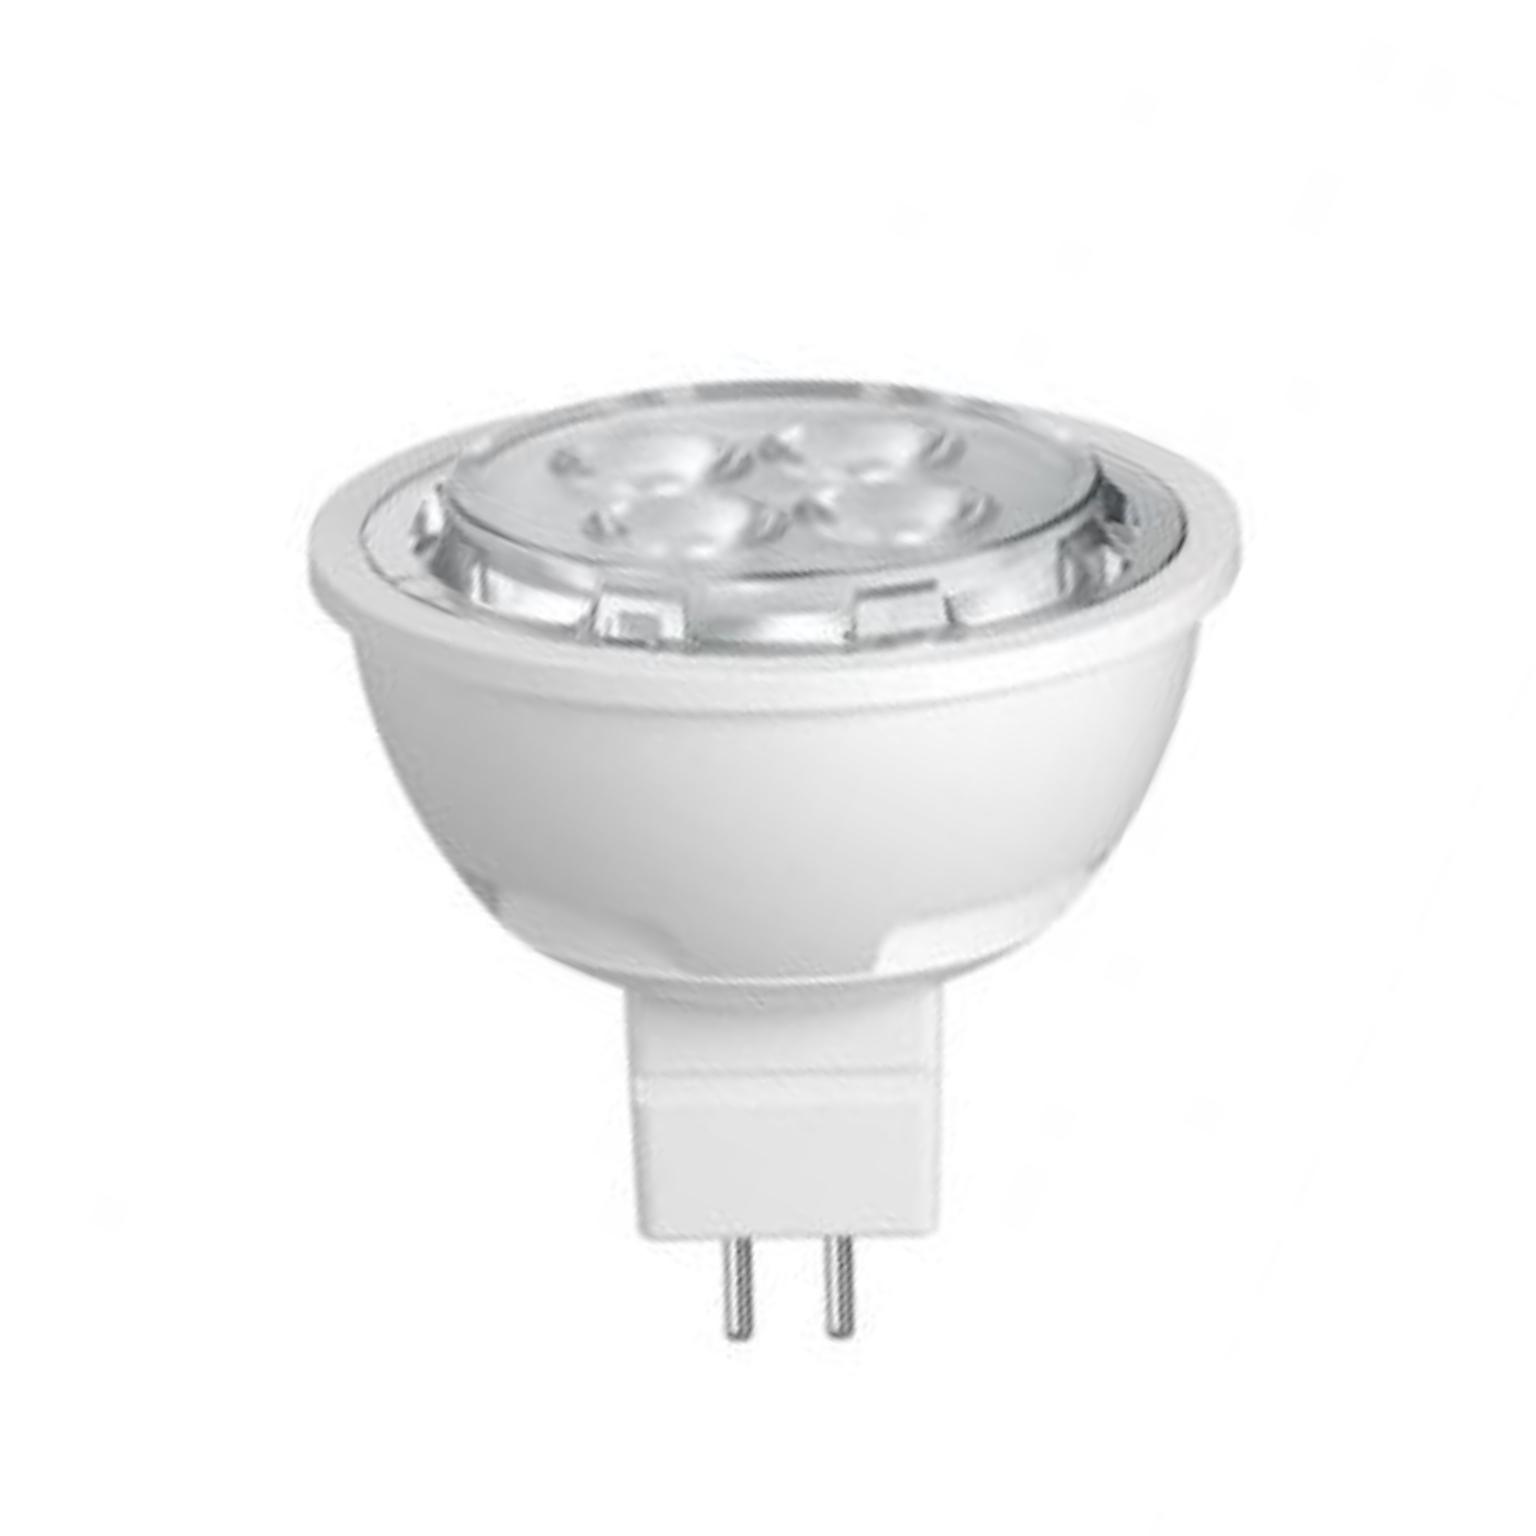 MR16 LED-lamp - 250 lumen - Ultron